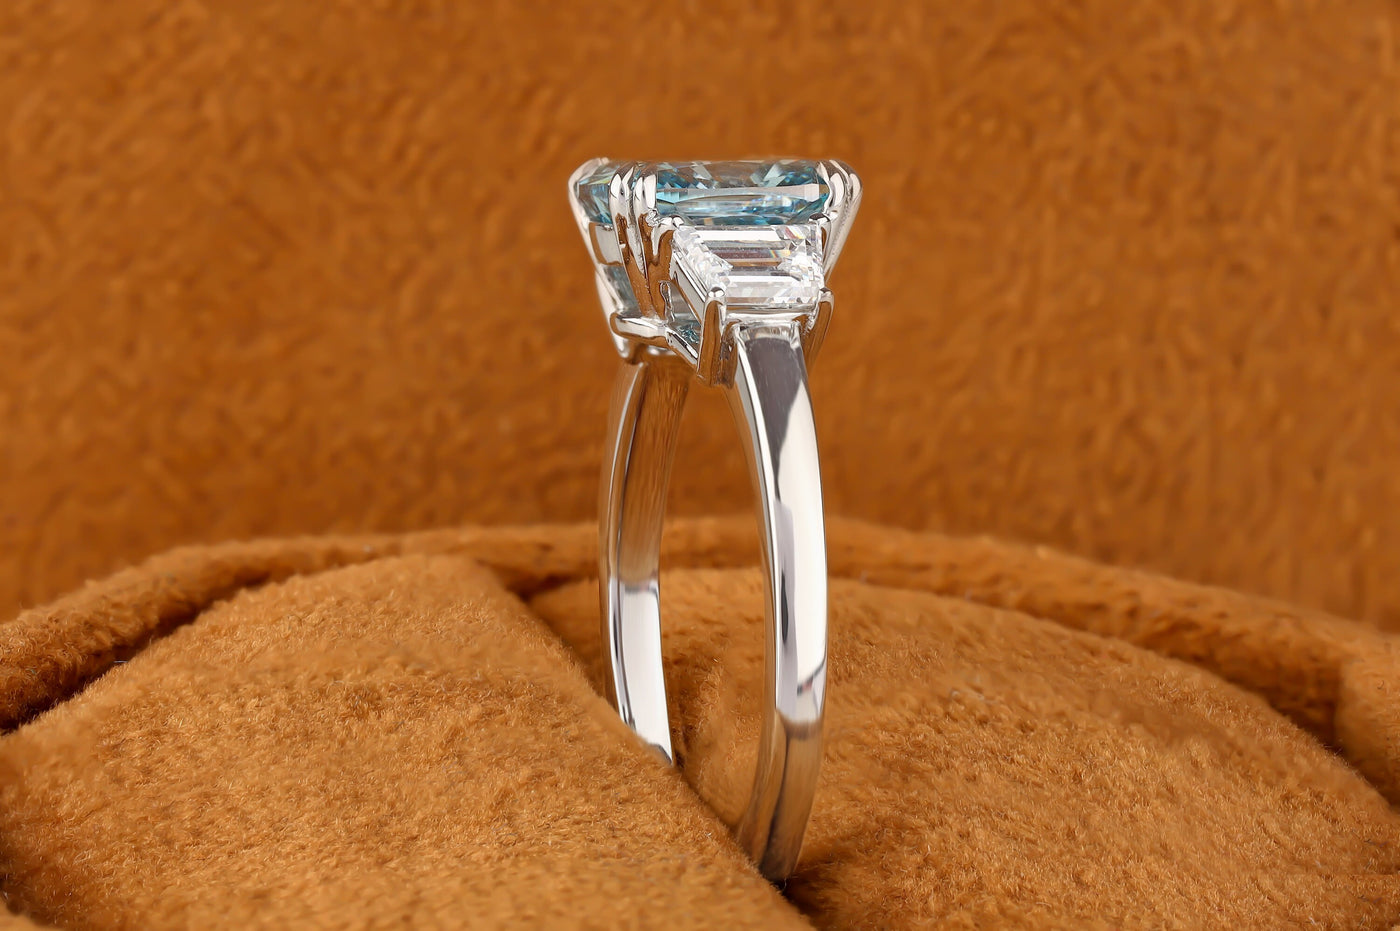 3 Ct Elongated Cushion Cut Aquamarine Gemstone Ring, Three Stone Moissanite Engagement Ring, Solitaire Wedding Ring, Solid White Gold Ring